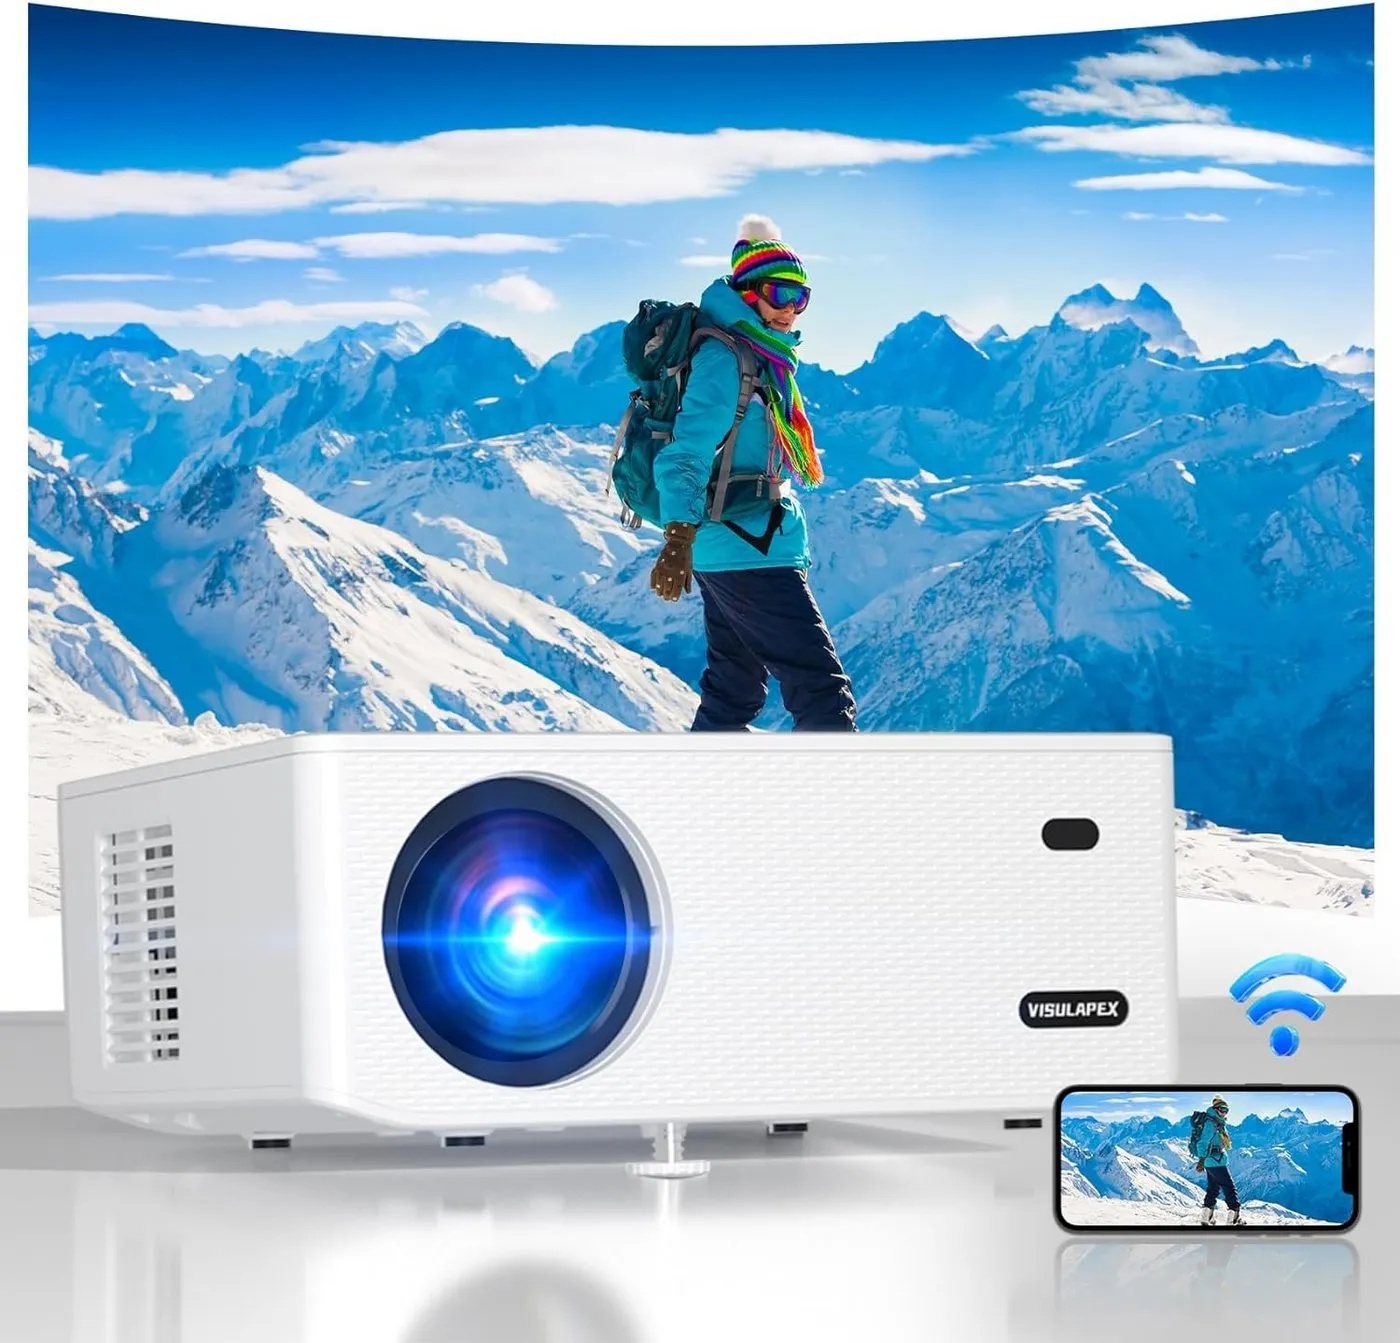 VISULAPEX 5G WiFi S1 Heimkino / Draußen / Portabler Projektor (15000 lm, 12000:1, 1920 x 1080 px, Kompatibel mit TV Stick/X-Box/DVD/Laptop/Smartphone) weiß